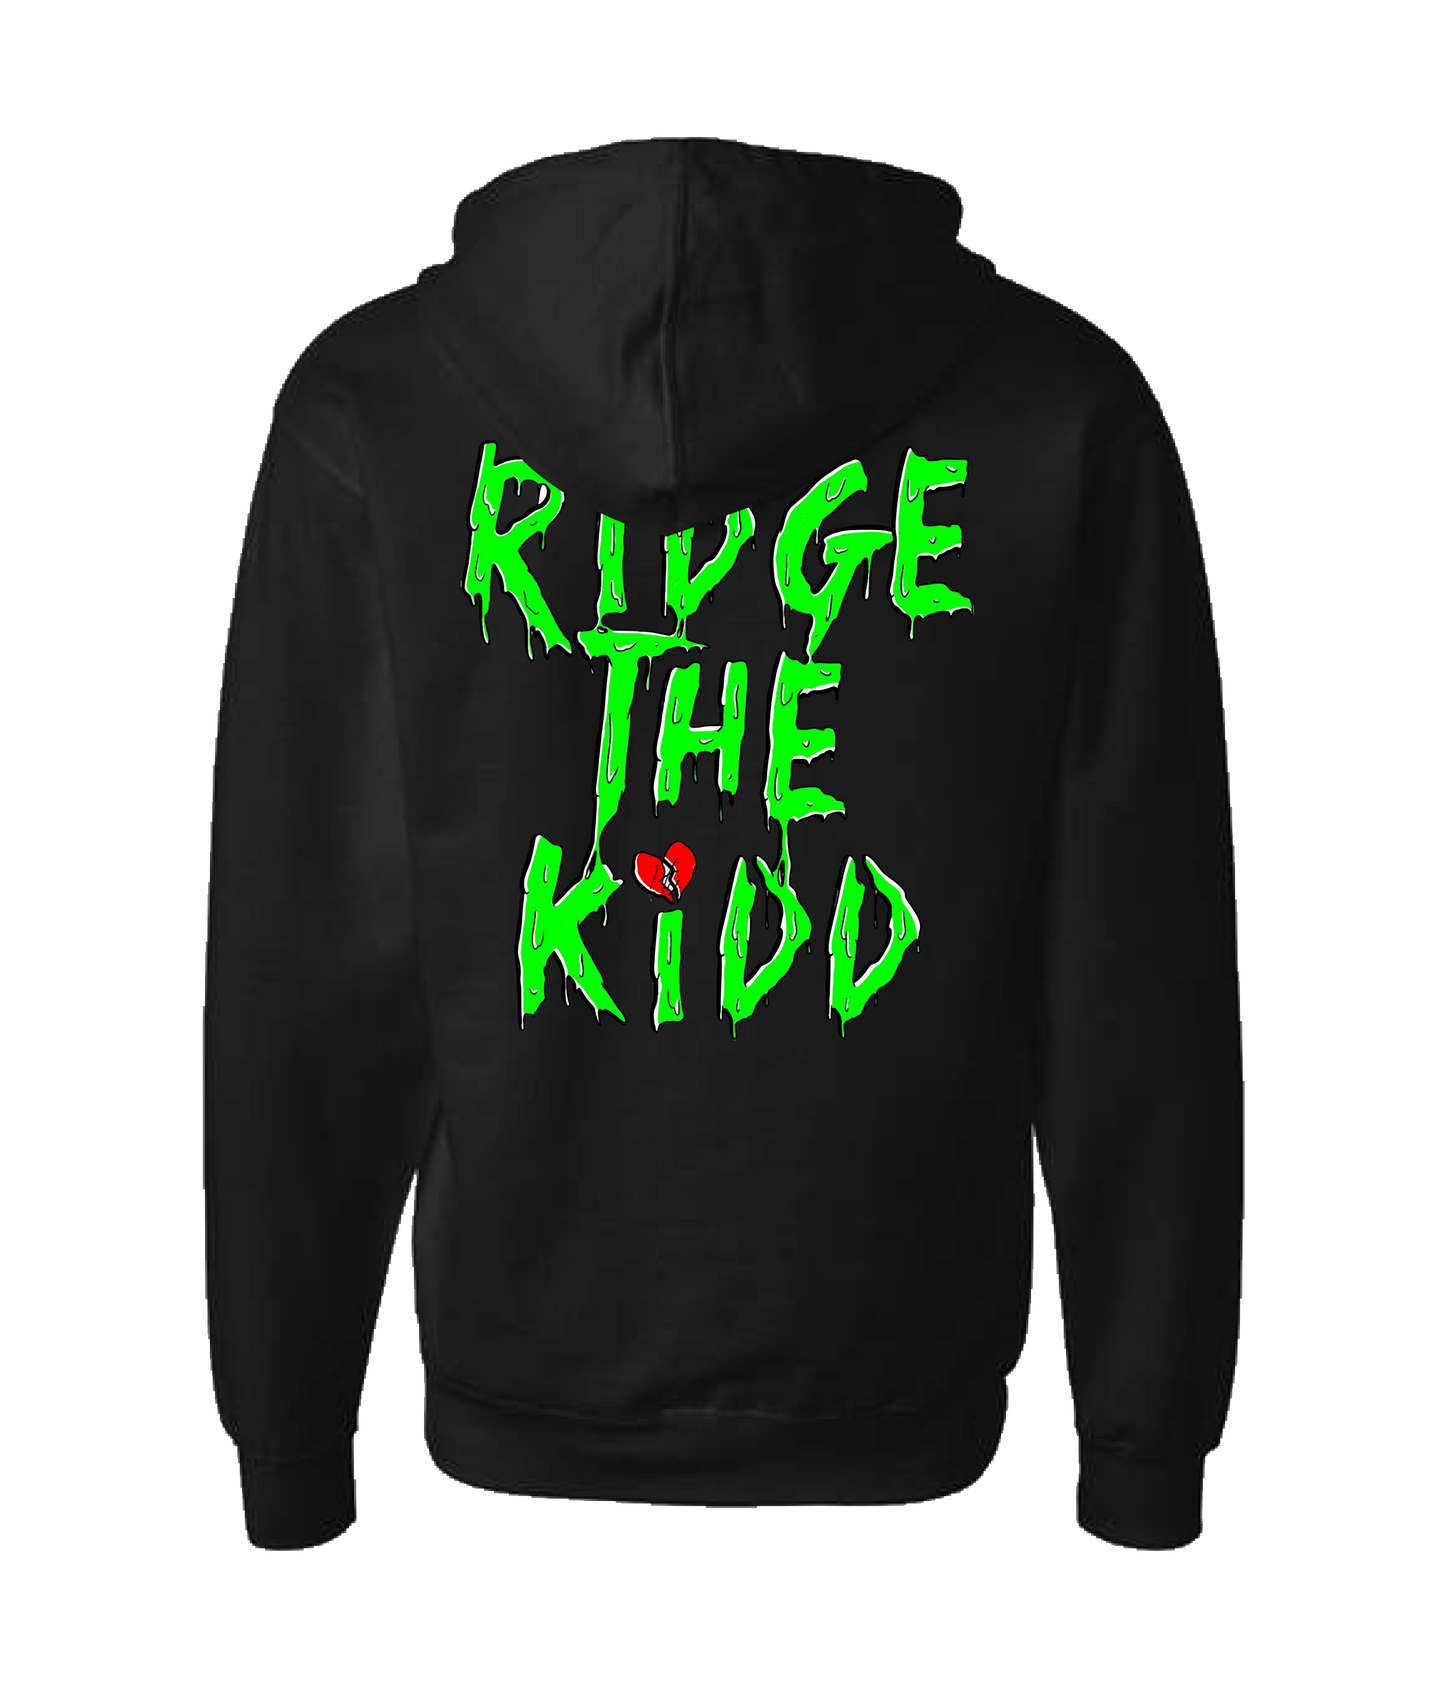 Ridge The Kidd - RTK - Black Zip Up Hoodie